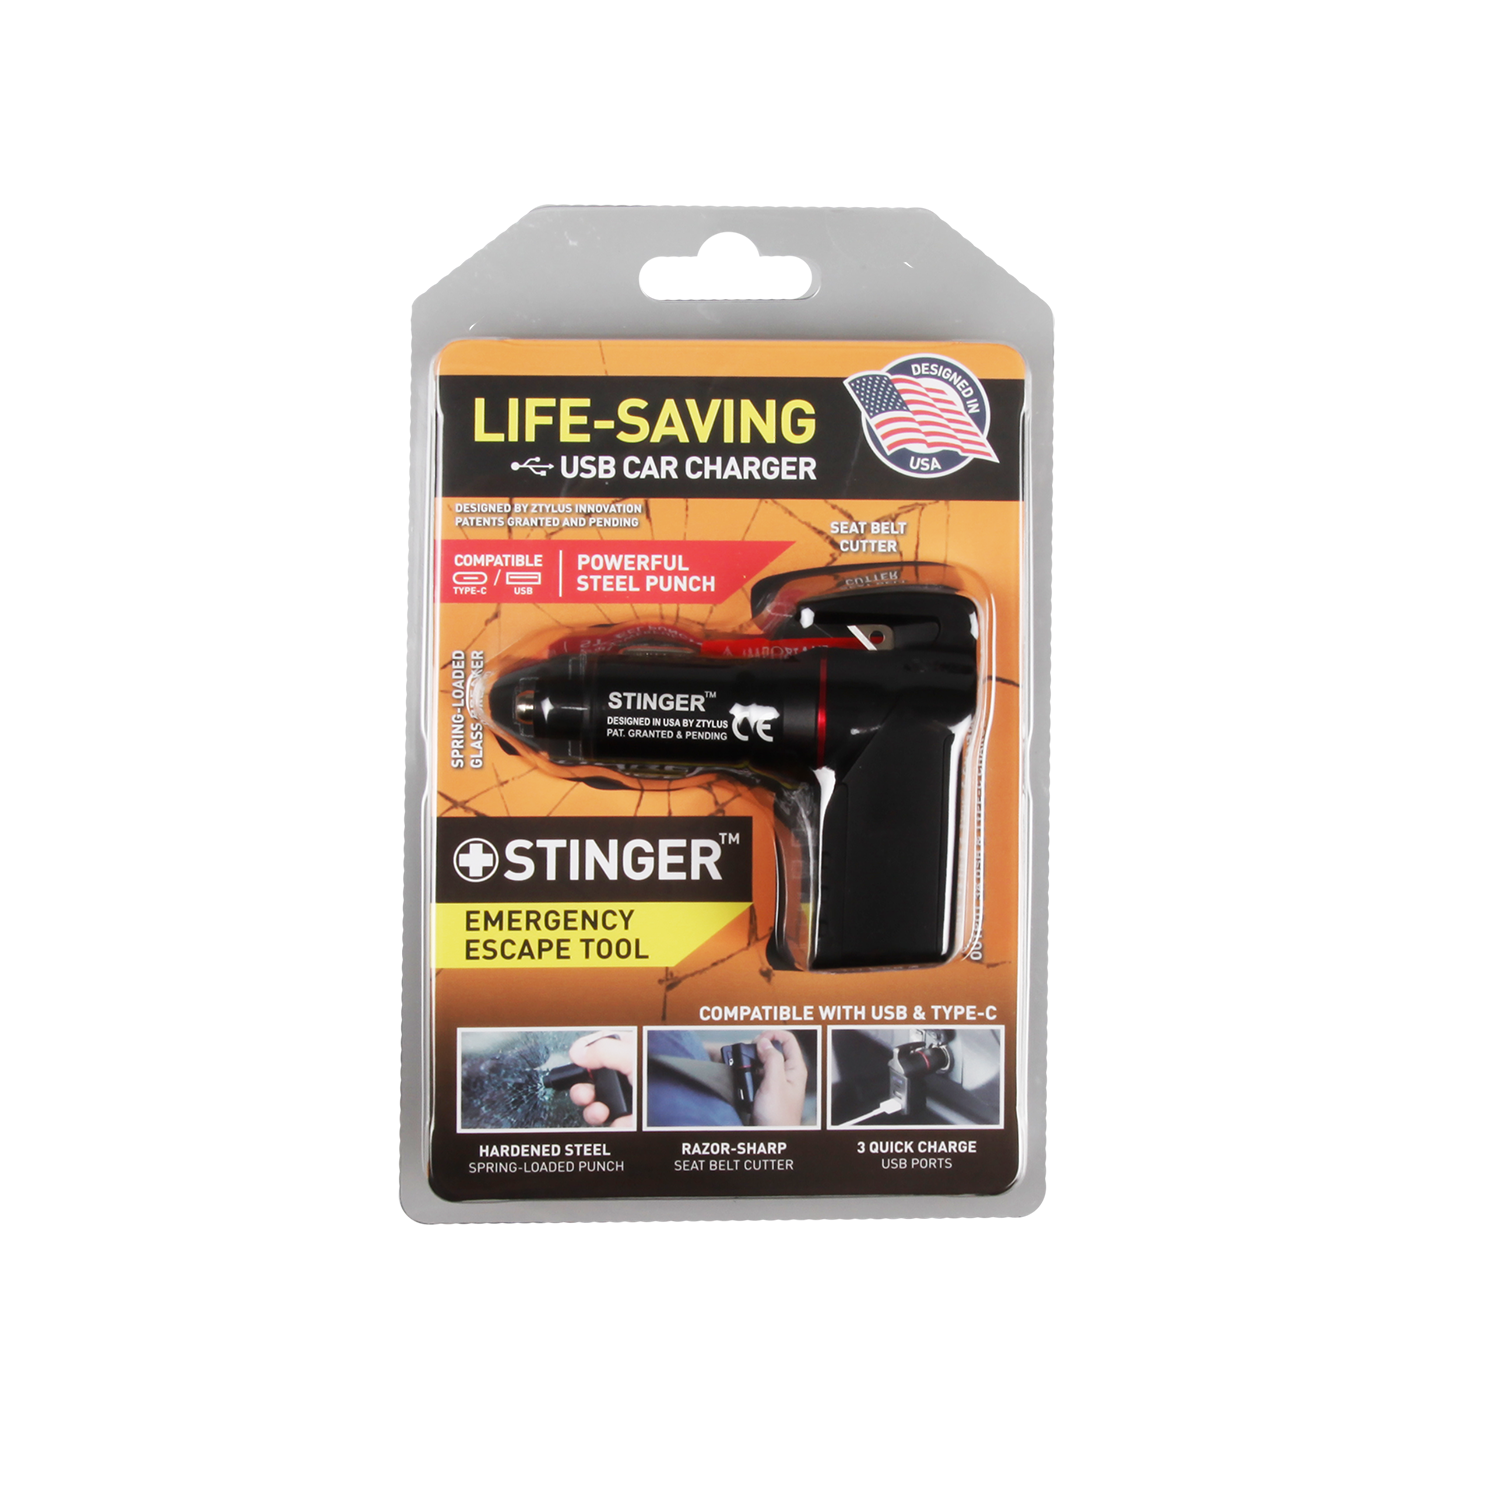  Stinger USB Emergency Escape Tool: Life-Saving Rescue